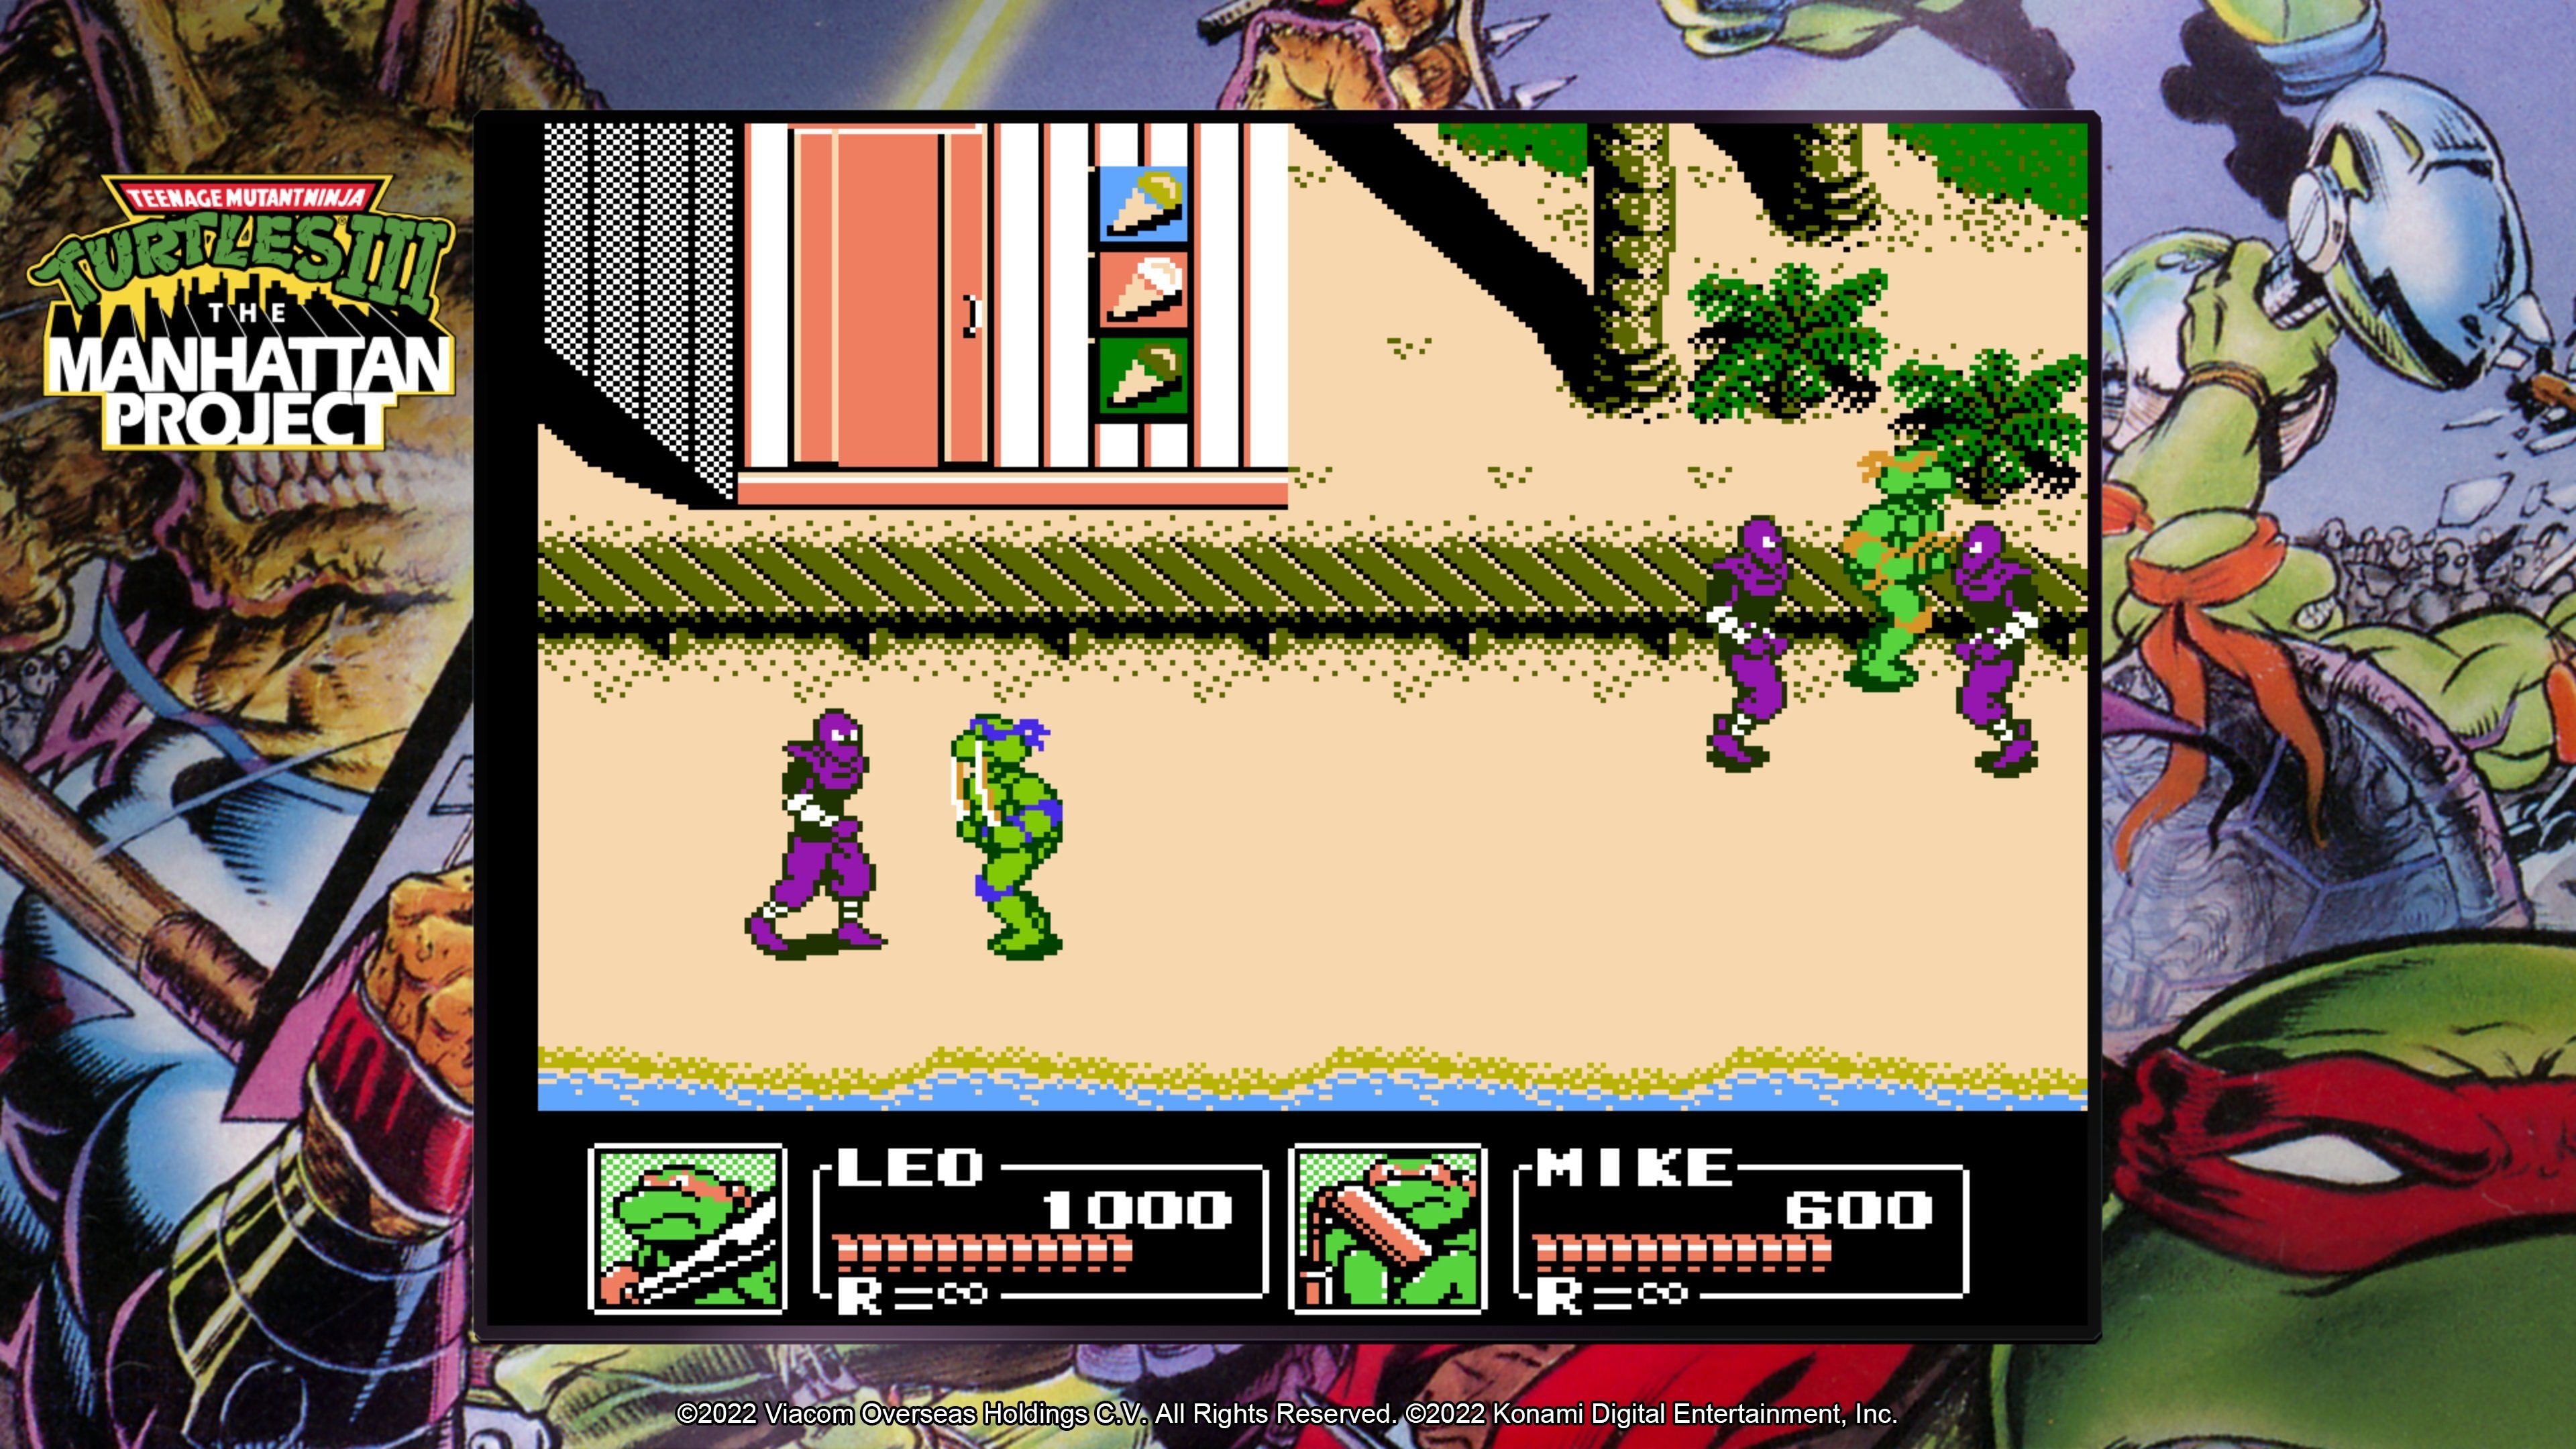 Cowabunga Turtles Ninja Teenage Collection Switch Konami The Nintendo Mutant -